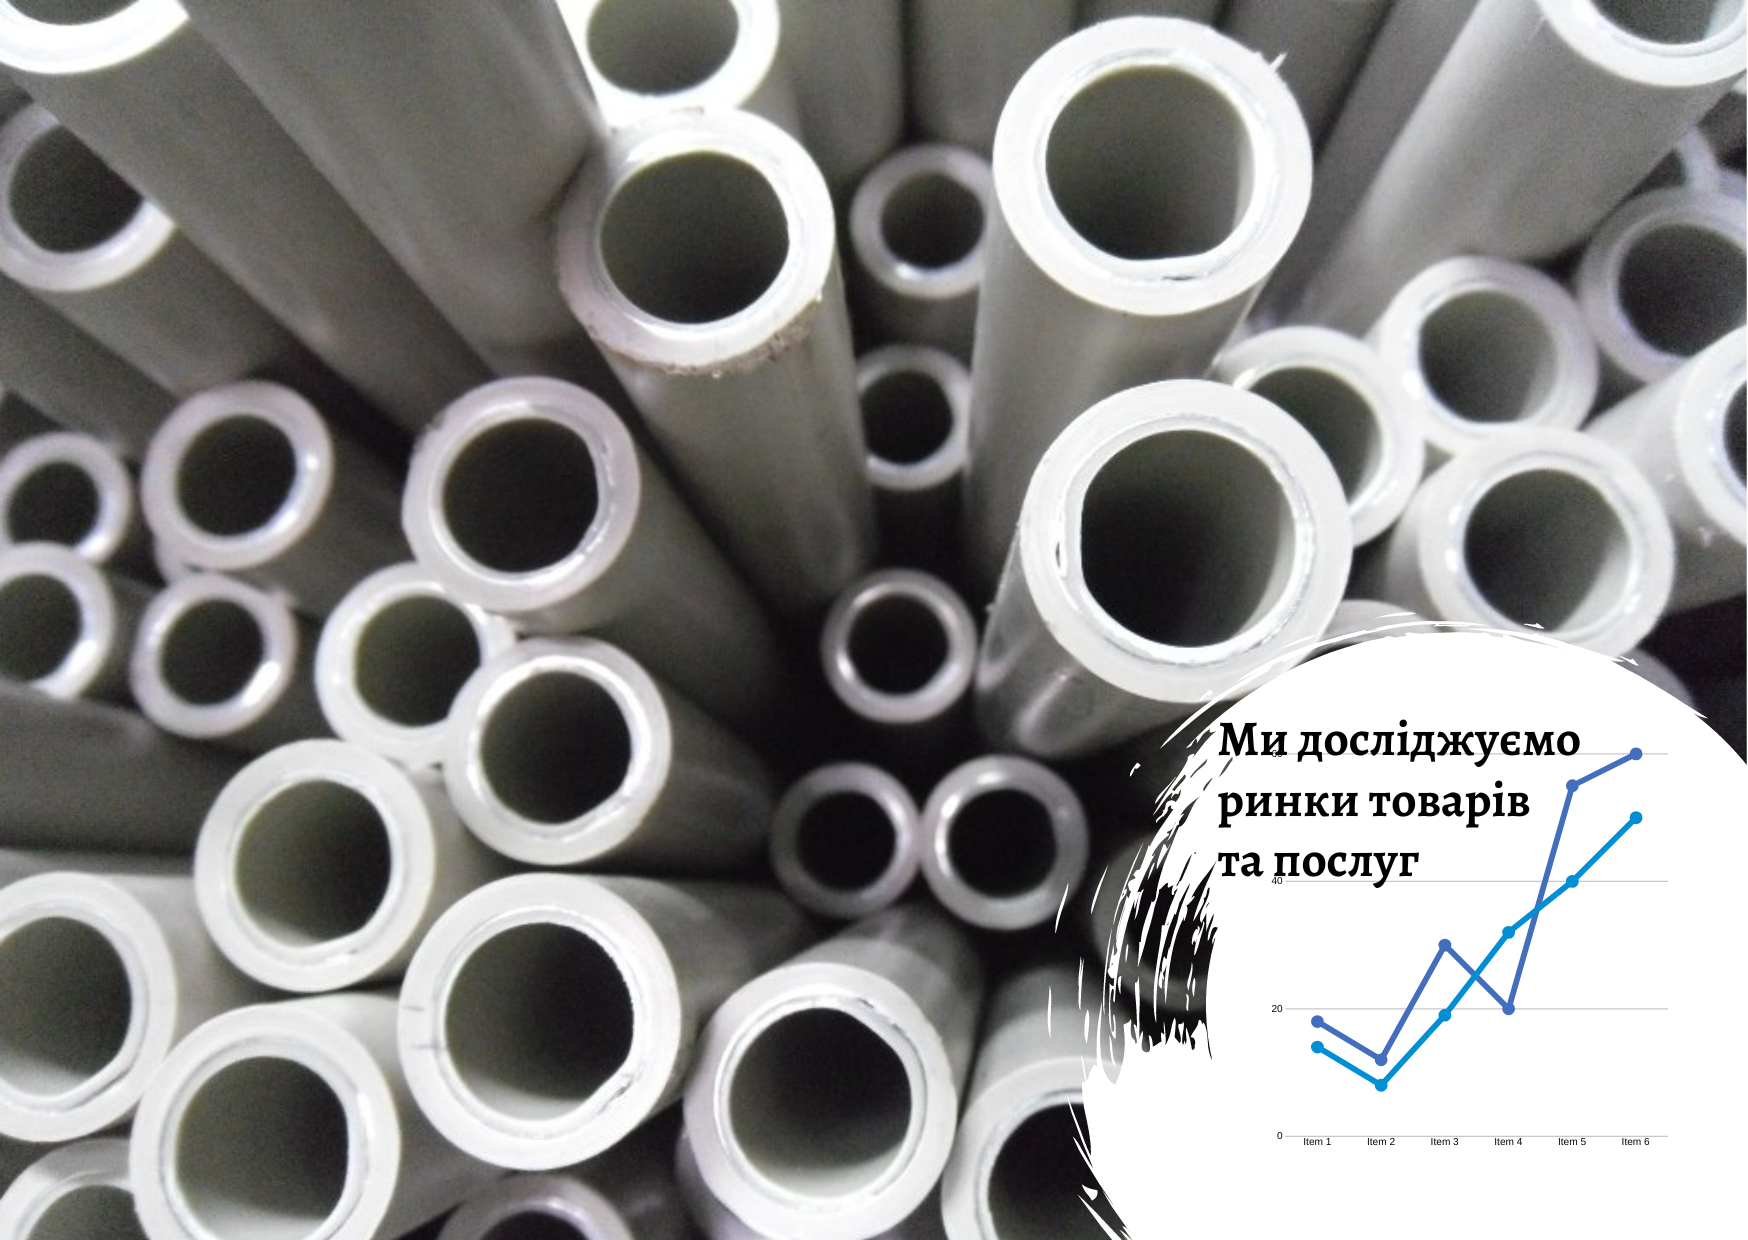 Ukrainian plastic pipes market: market research report